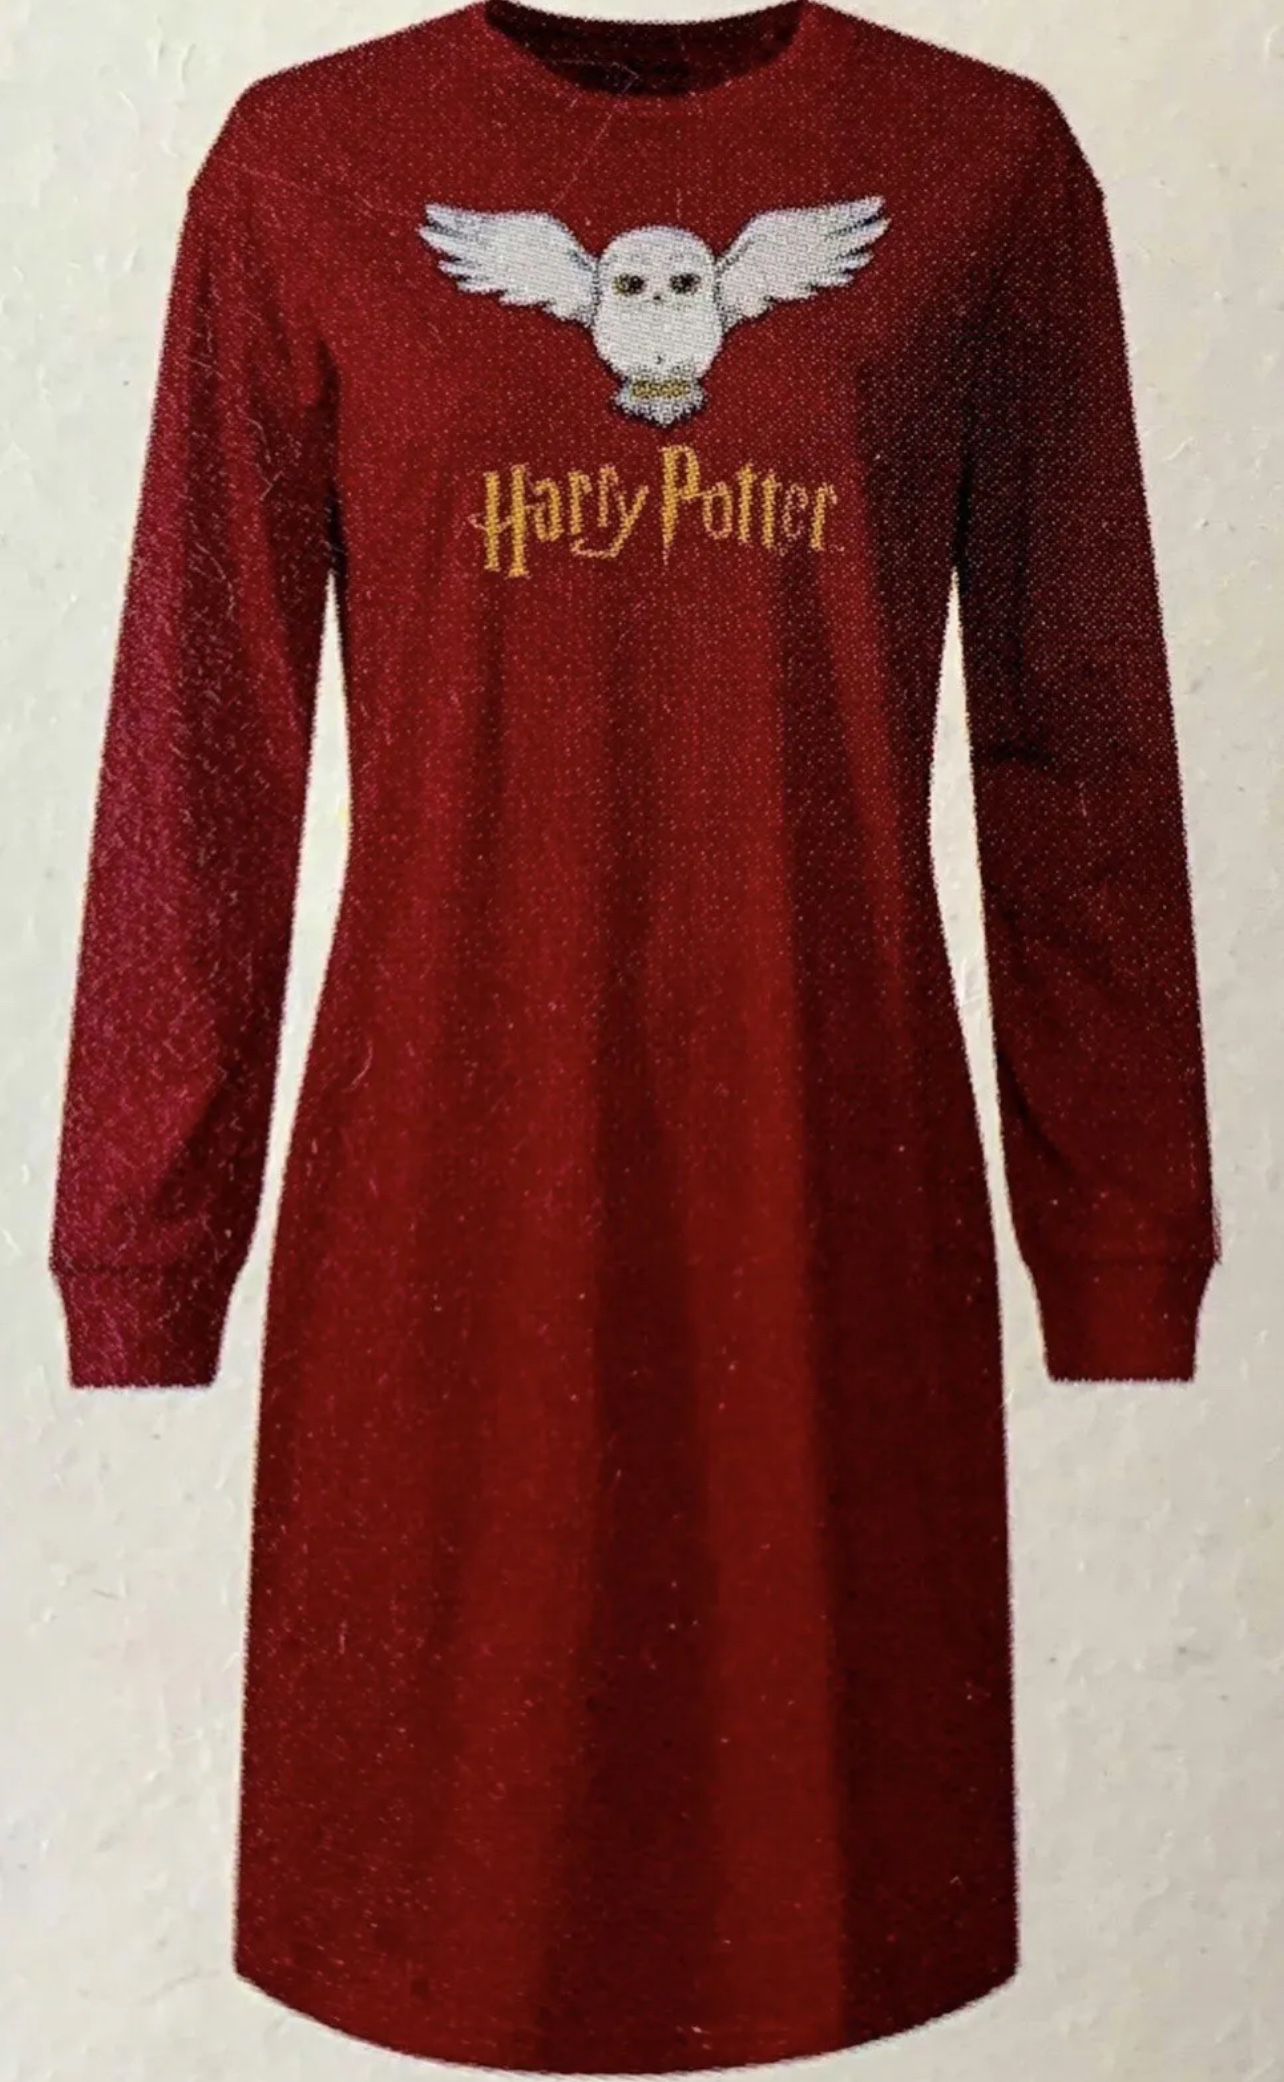 WIZARDING WORLD Harry Potter Hogwarts Houses Pajama Nightgown Sleep Shirt S